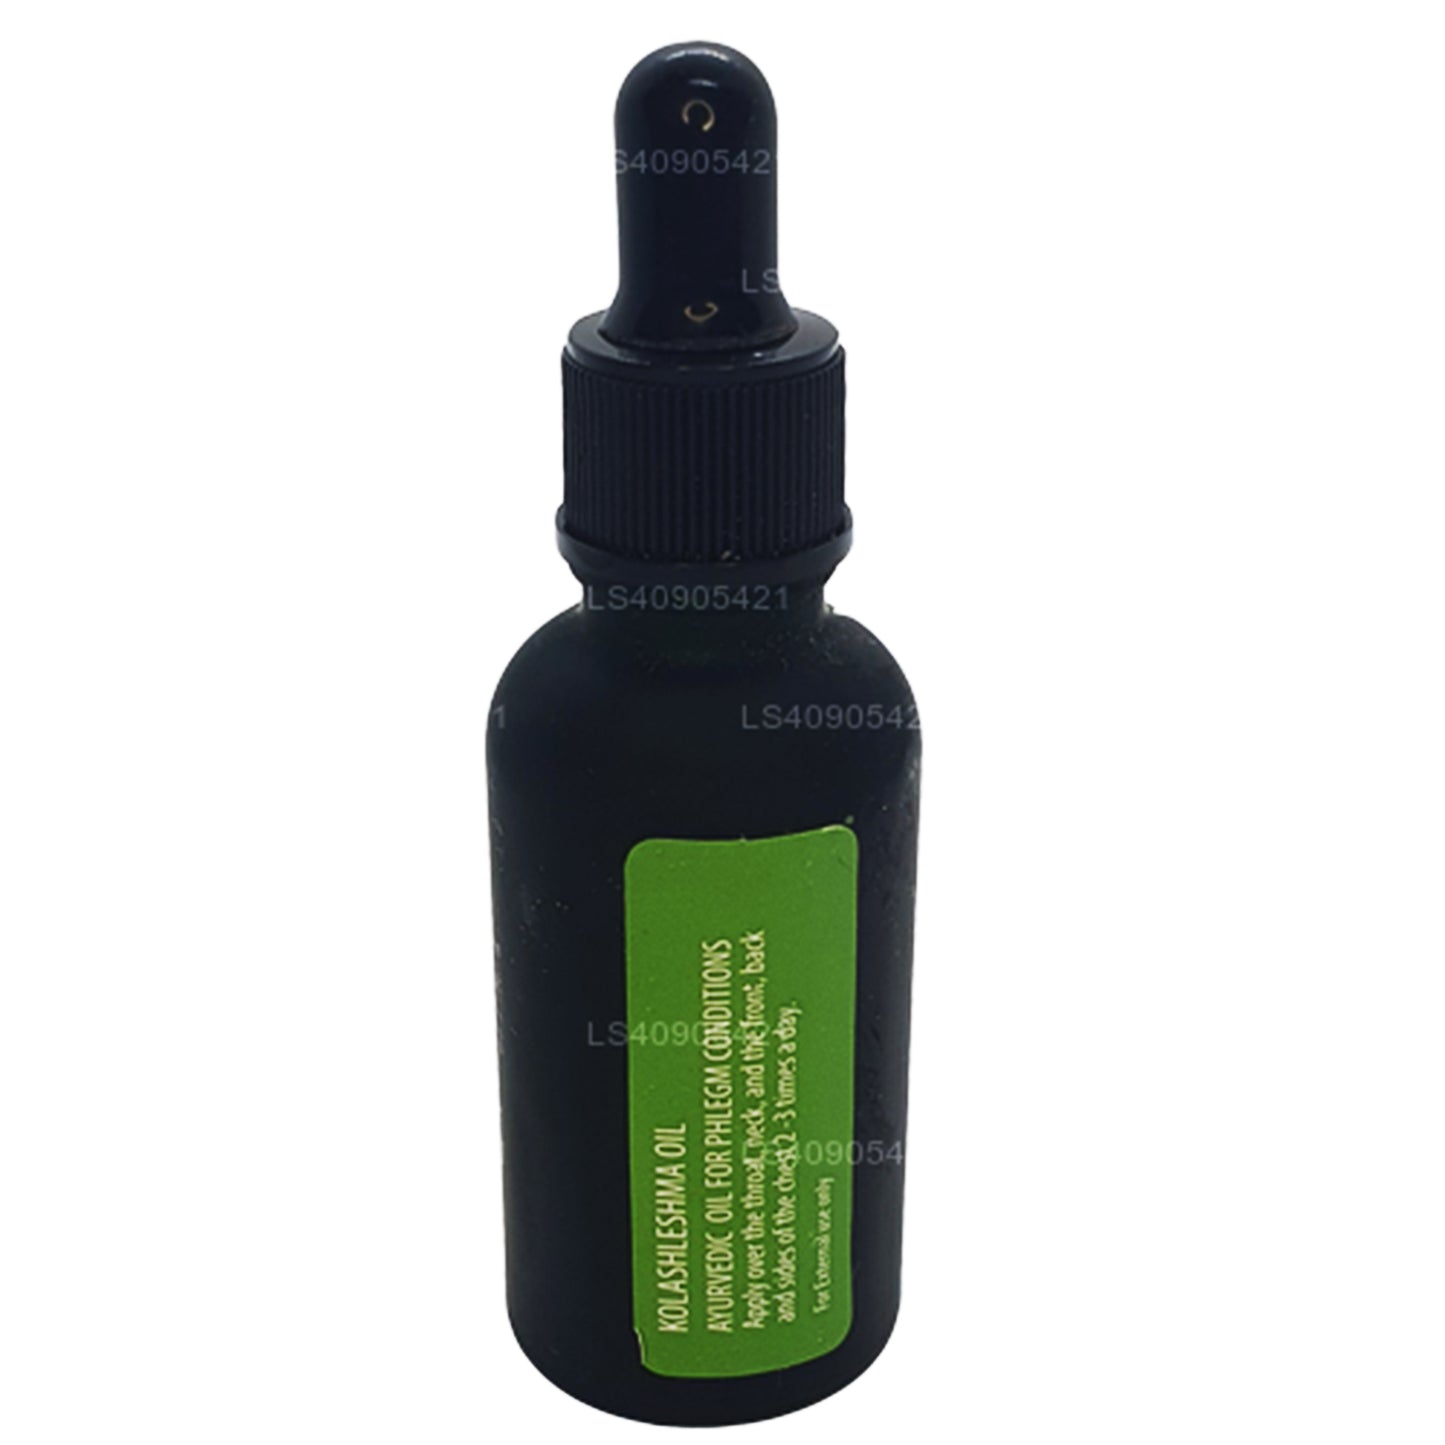 Link Kolasheshma etherische olie (30 ml)